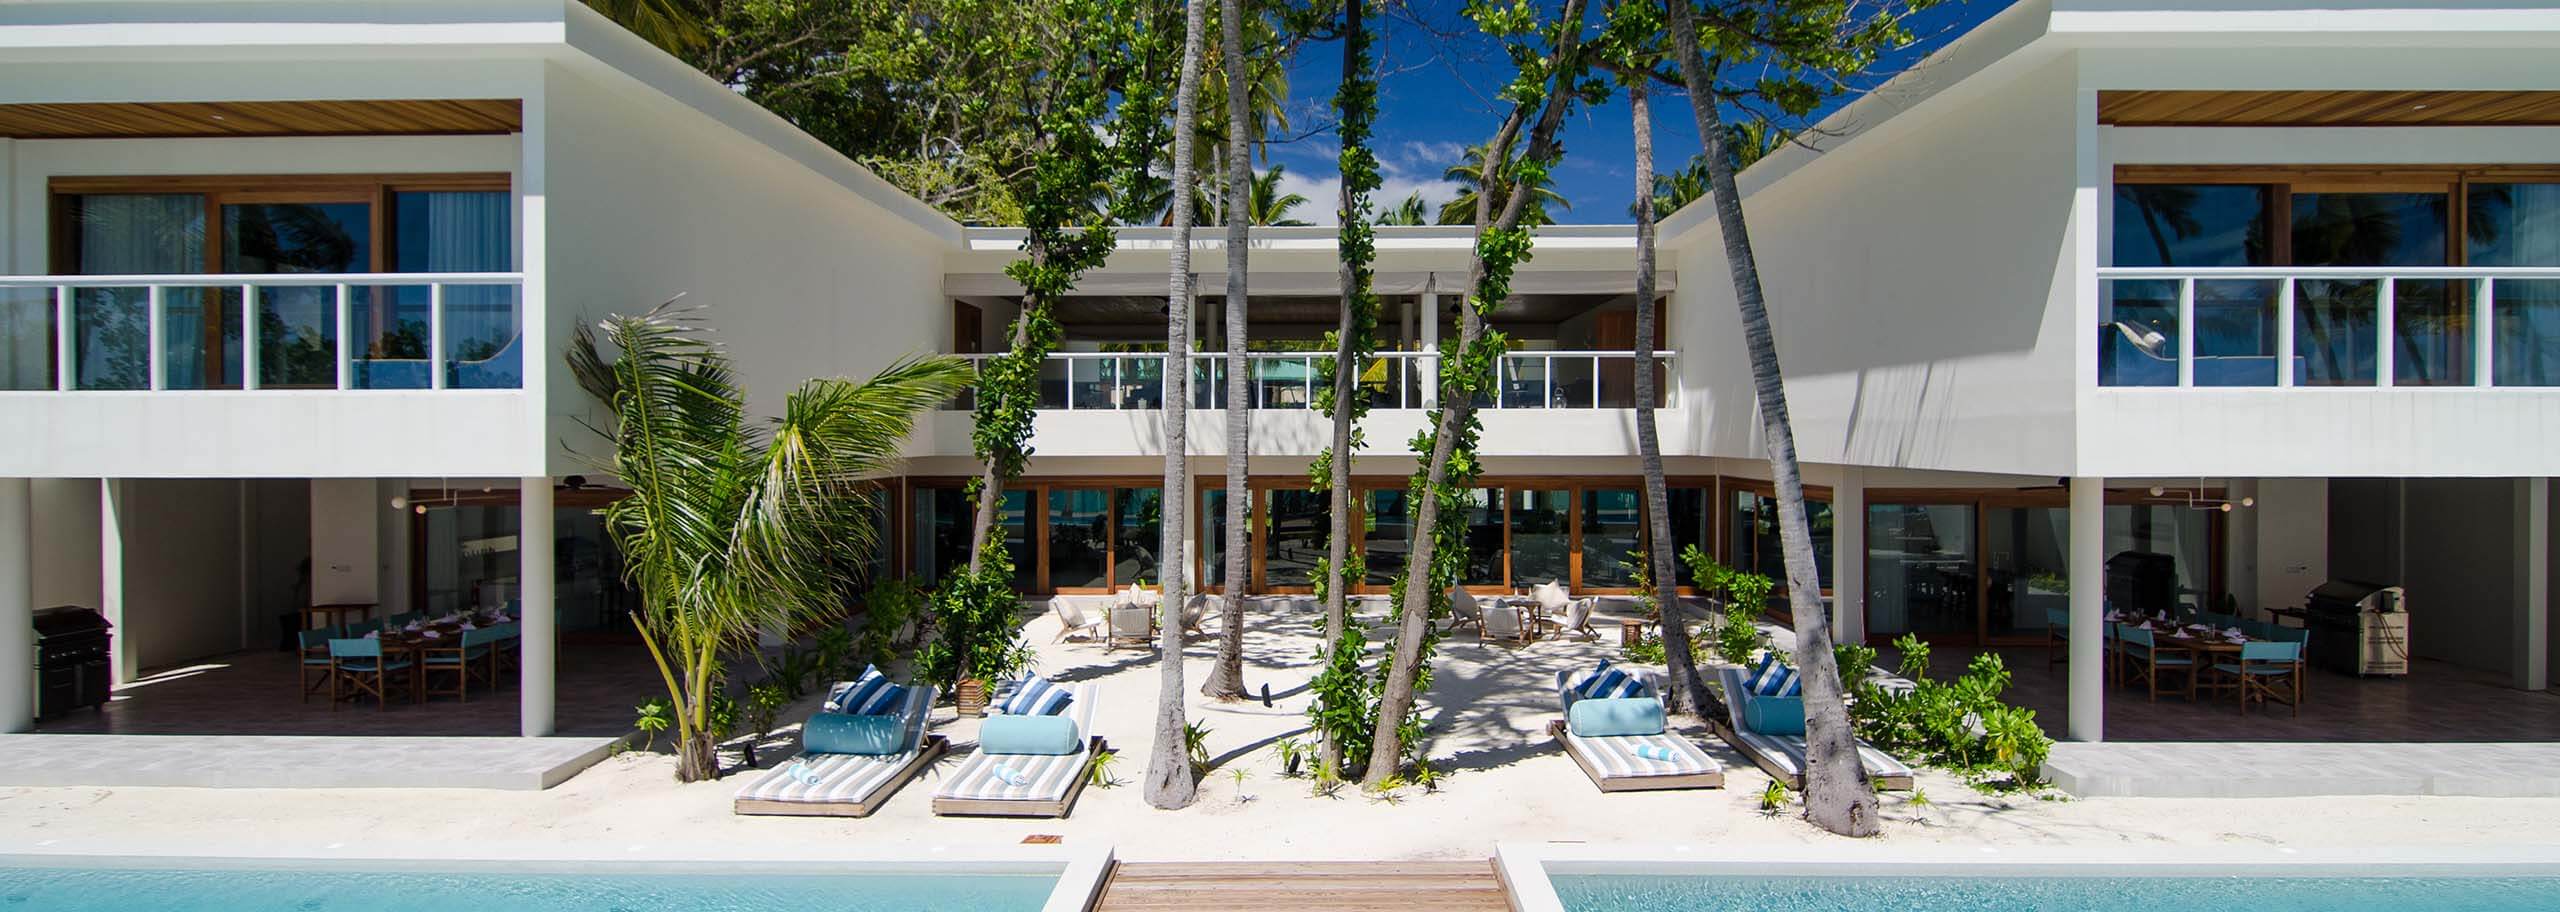 The great beach villa residence | Amilla Beach Villa Residences ...